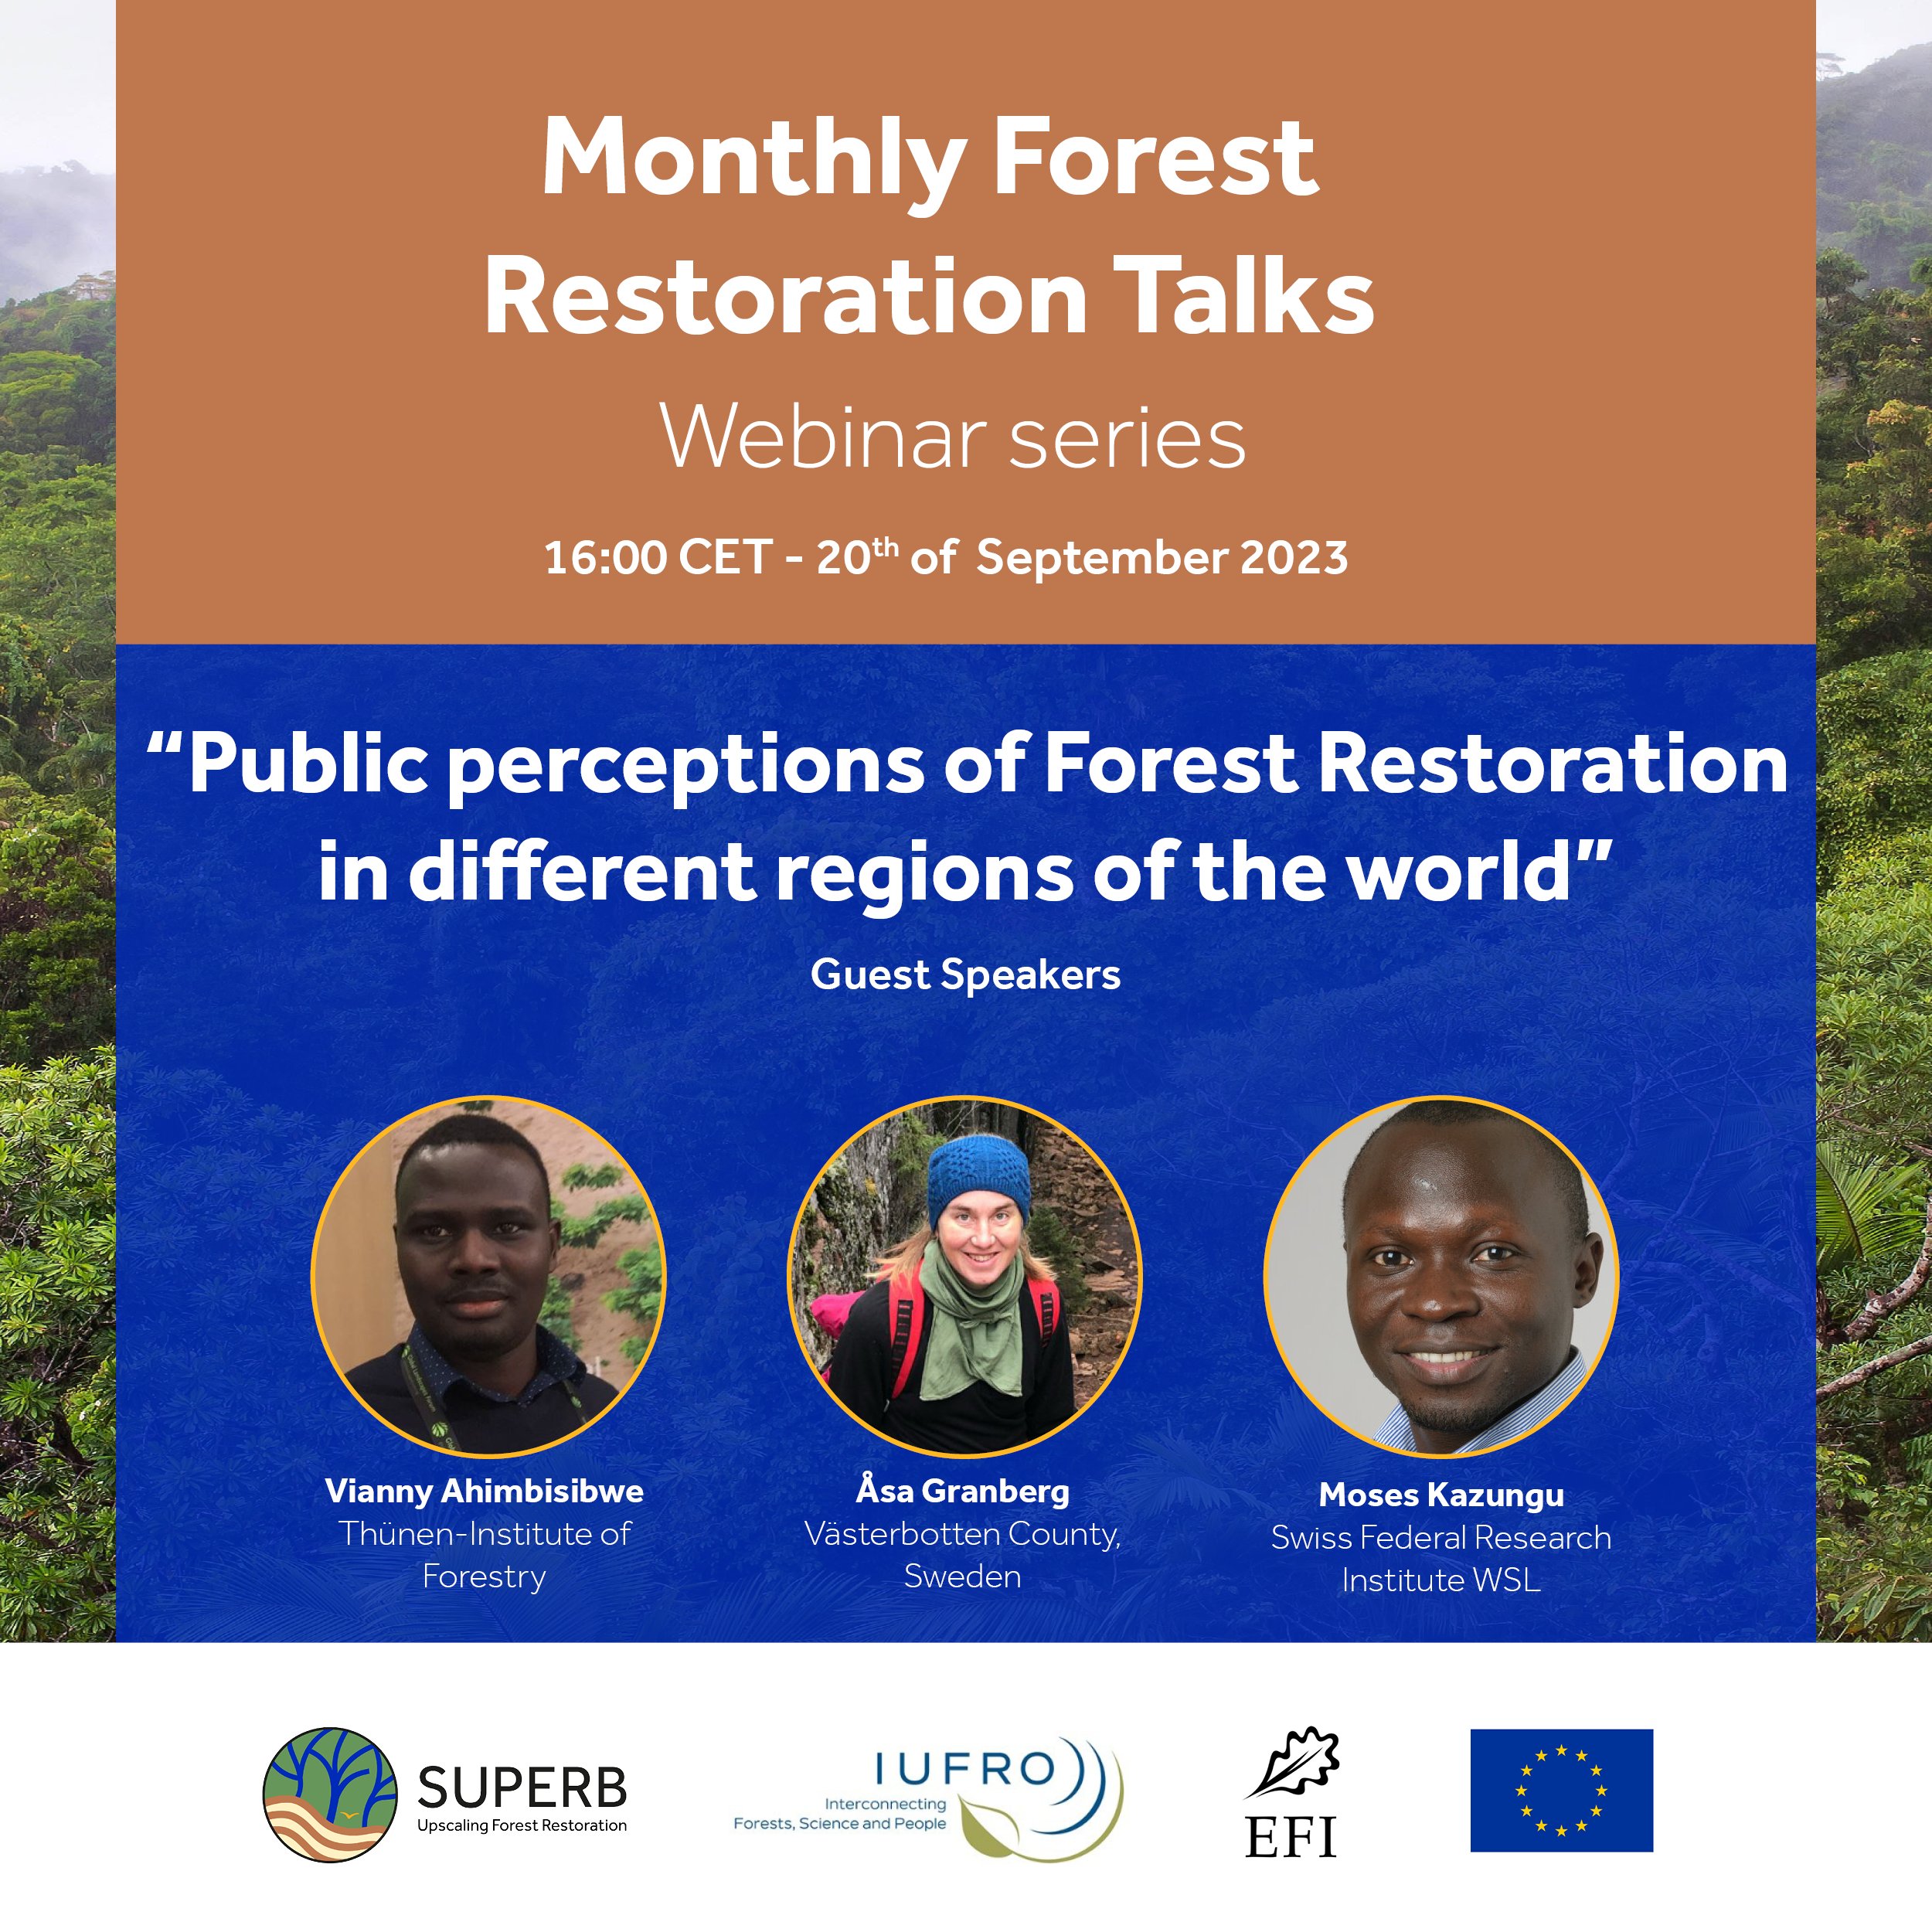 Public perceptions of Forest Landscape Restoration